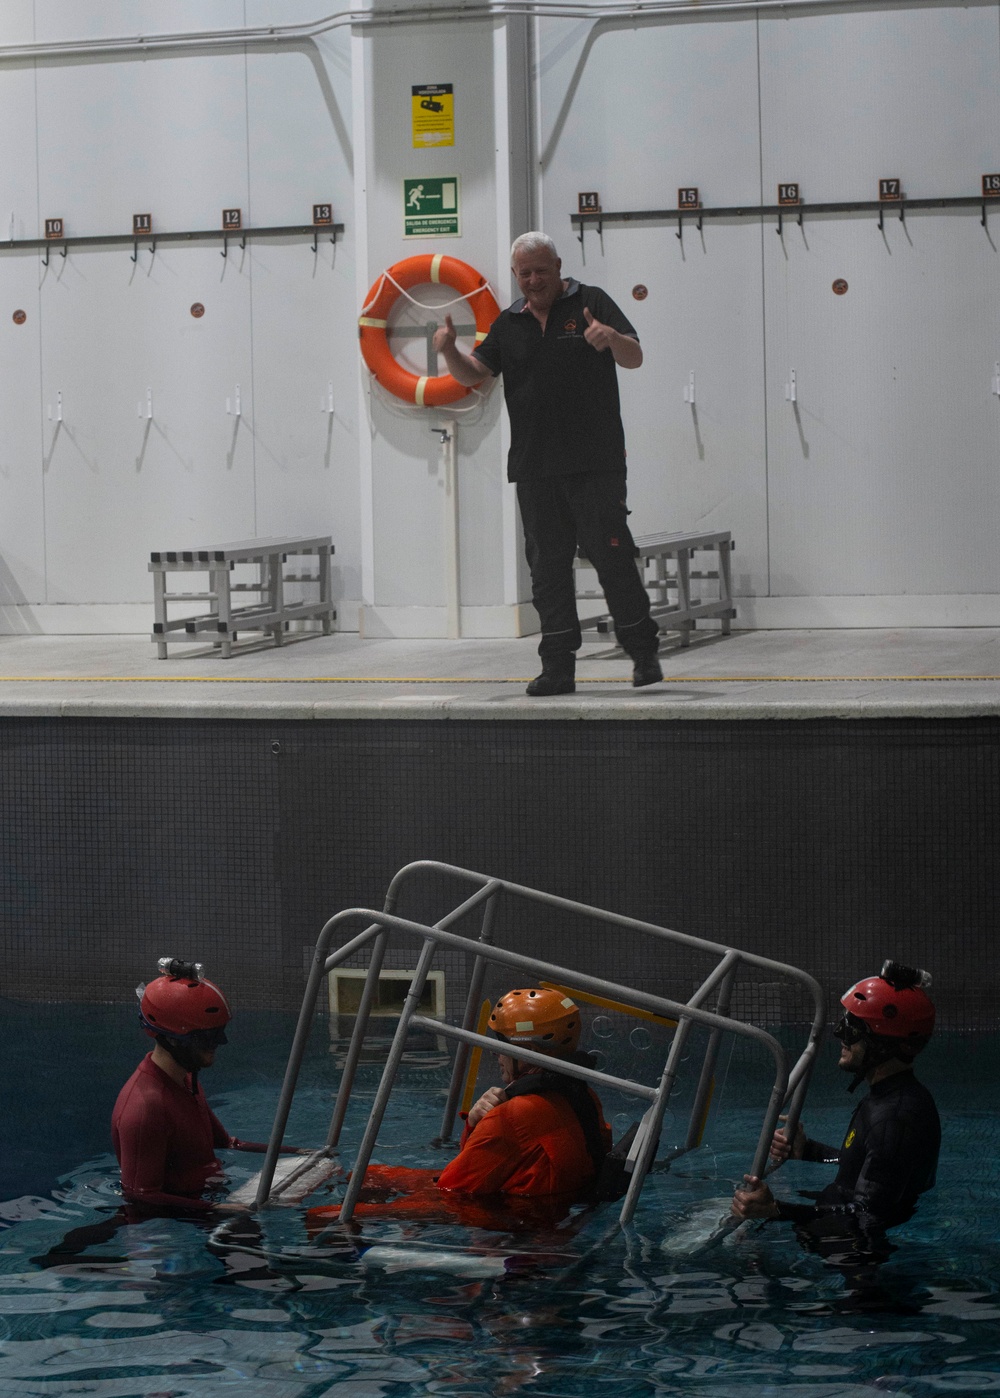 Rota Middle-High School's NJROTC Students Tour Underwater Egress Training Facility